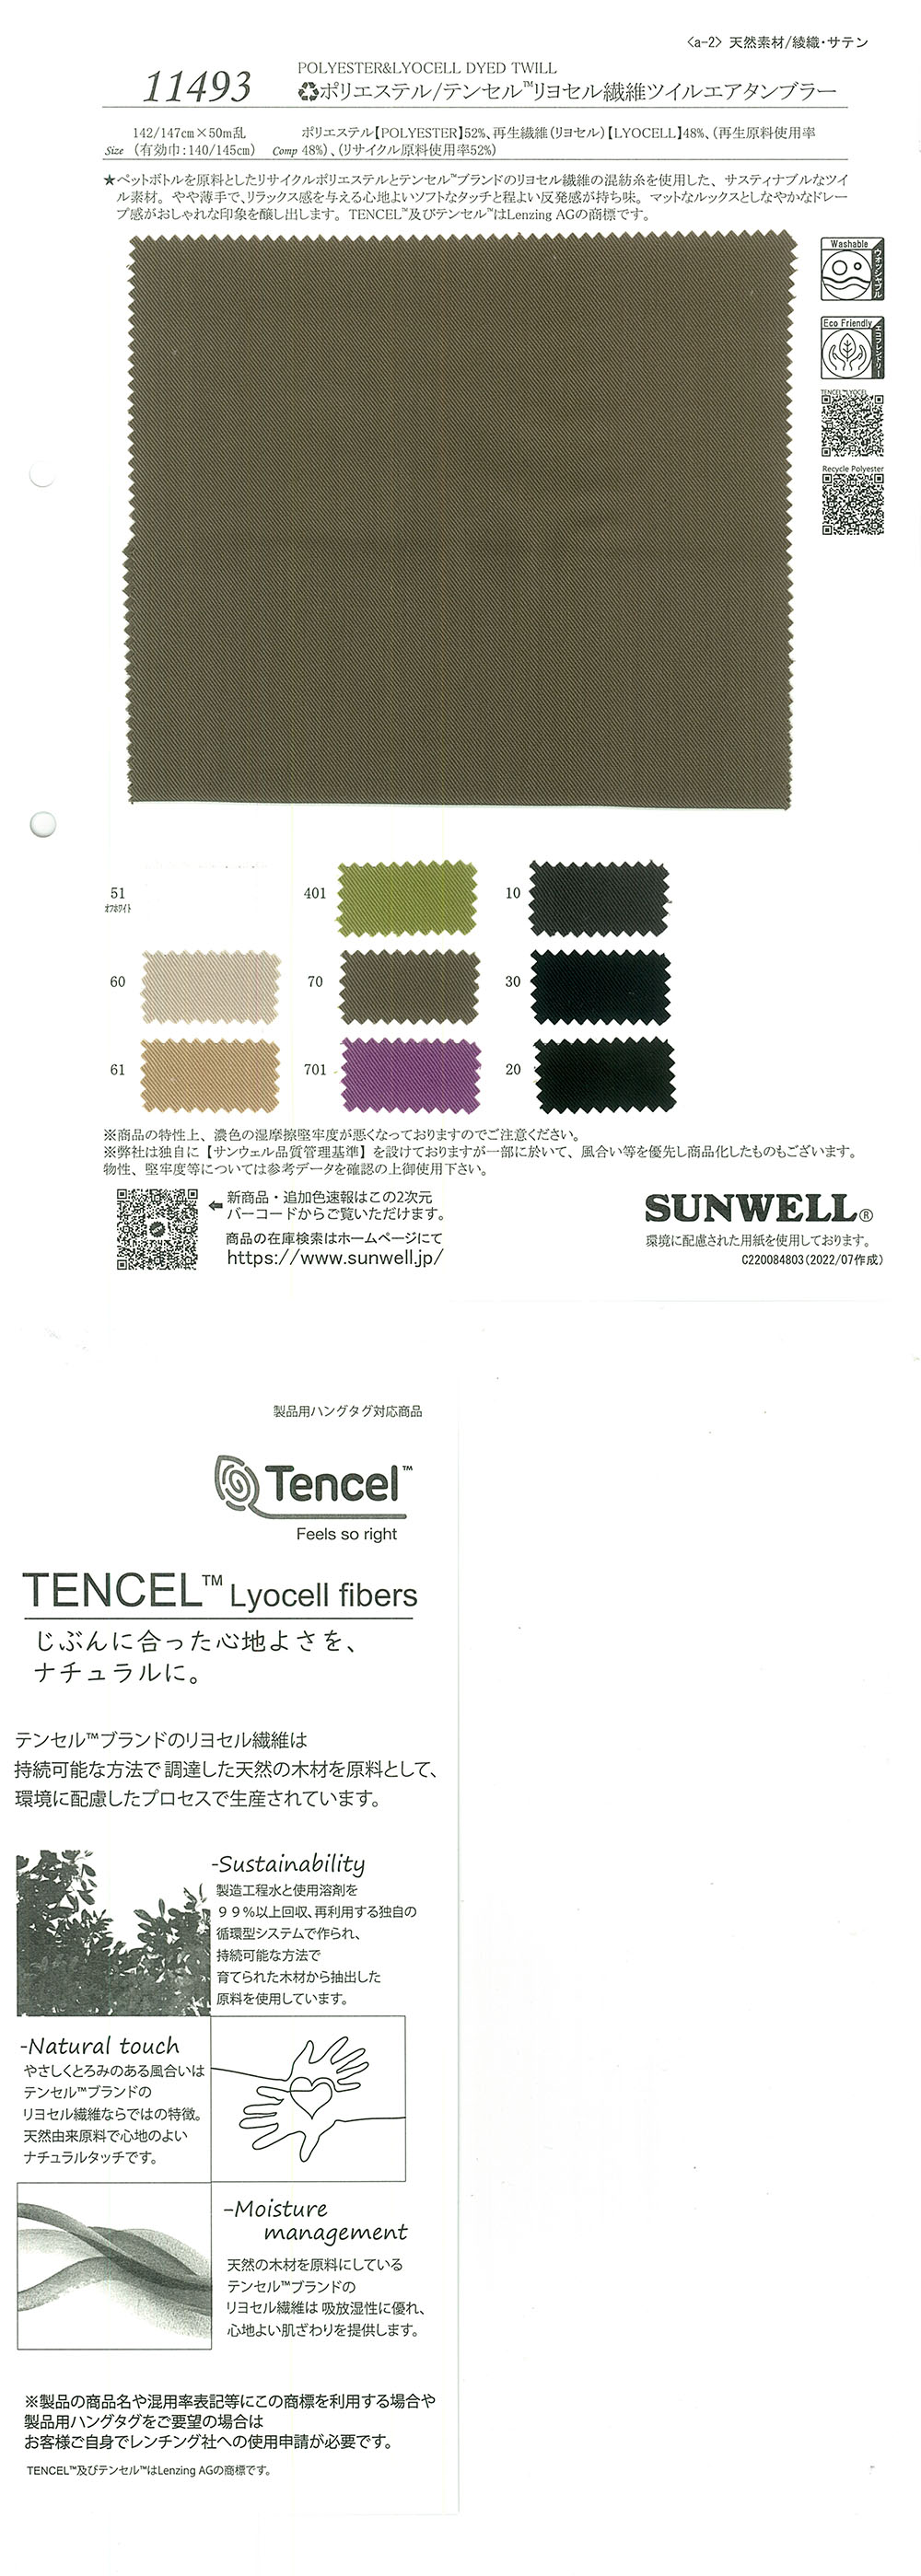 11493 (Li) Polyester/Tencel (TM) Lyocell-Faser-Twill-Luftfilter[Textilgewebe] SUNWELL